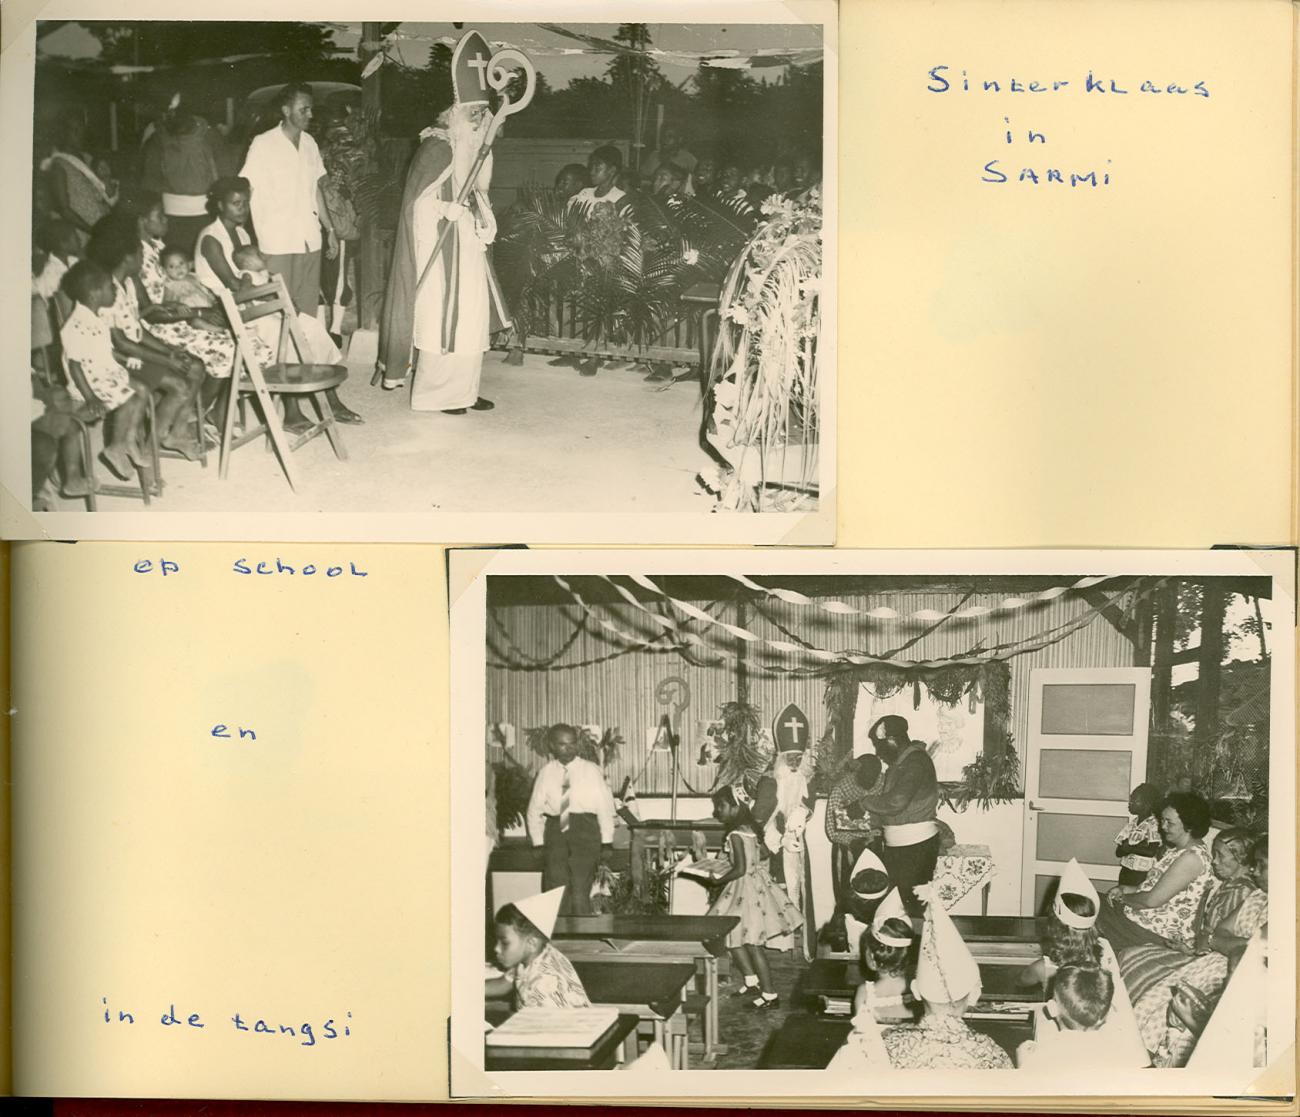 BD/83/89 - 
Sinterklaas celebration at school and at the tangsi (barracks)
